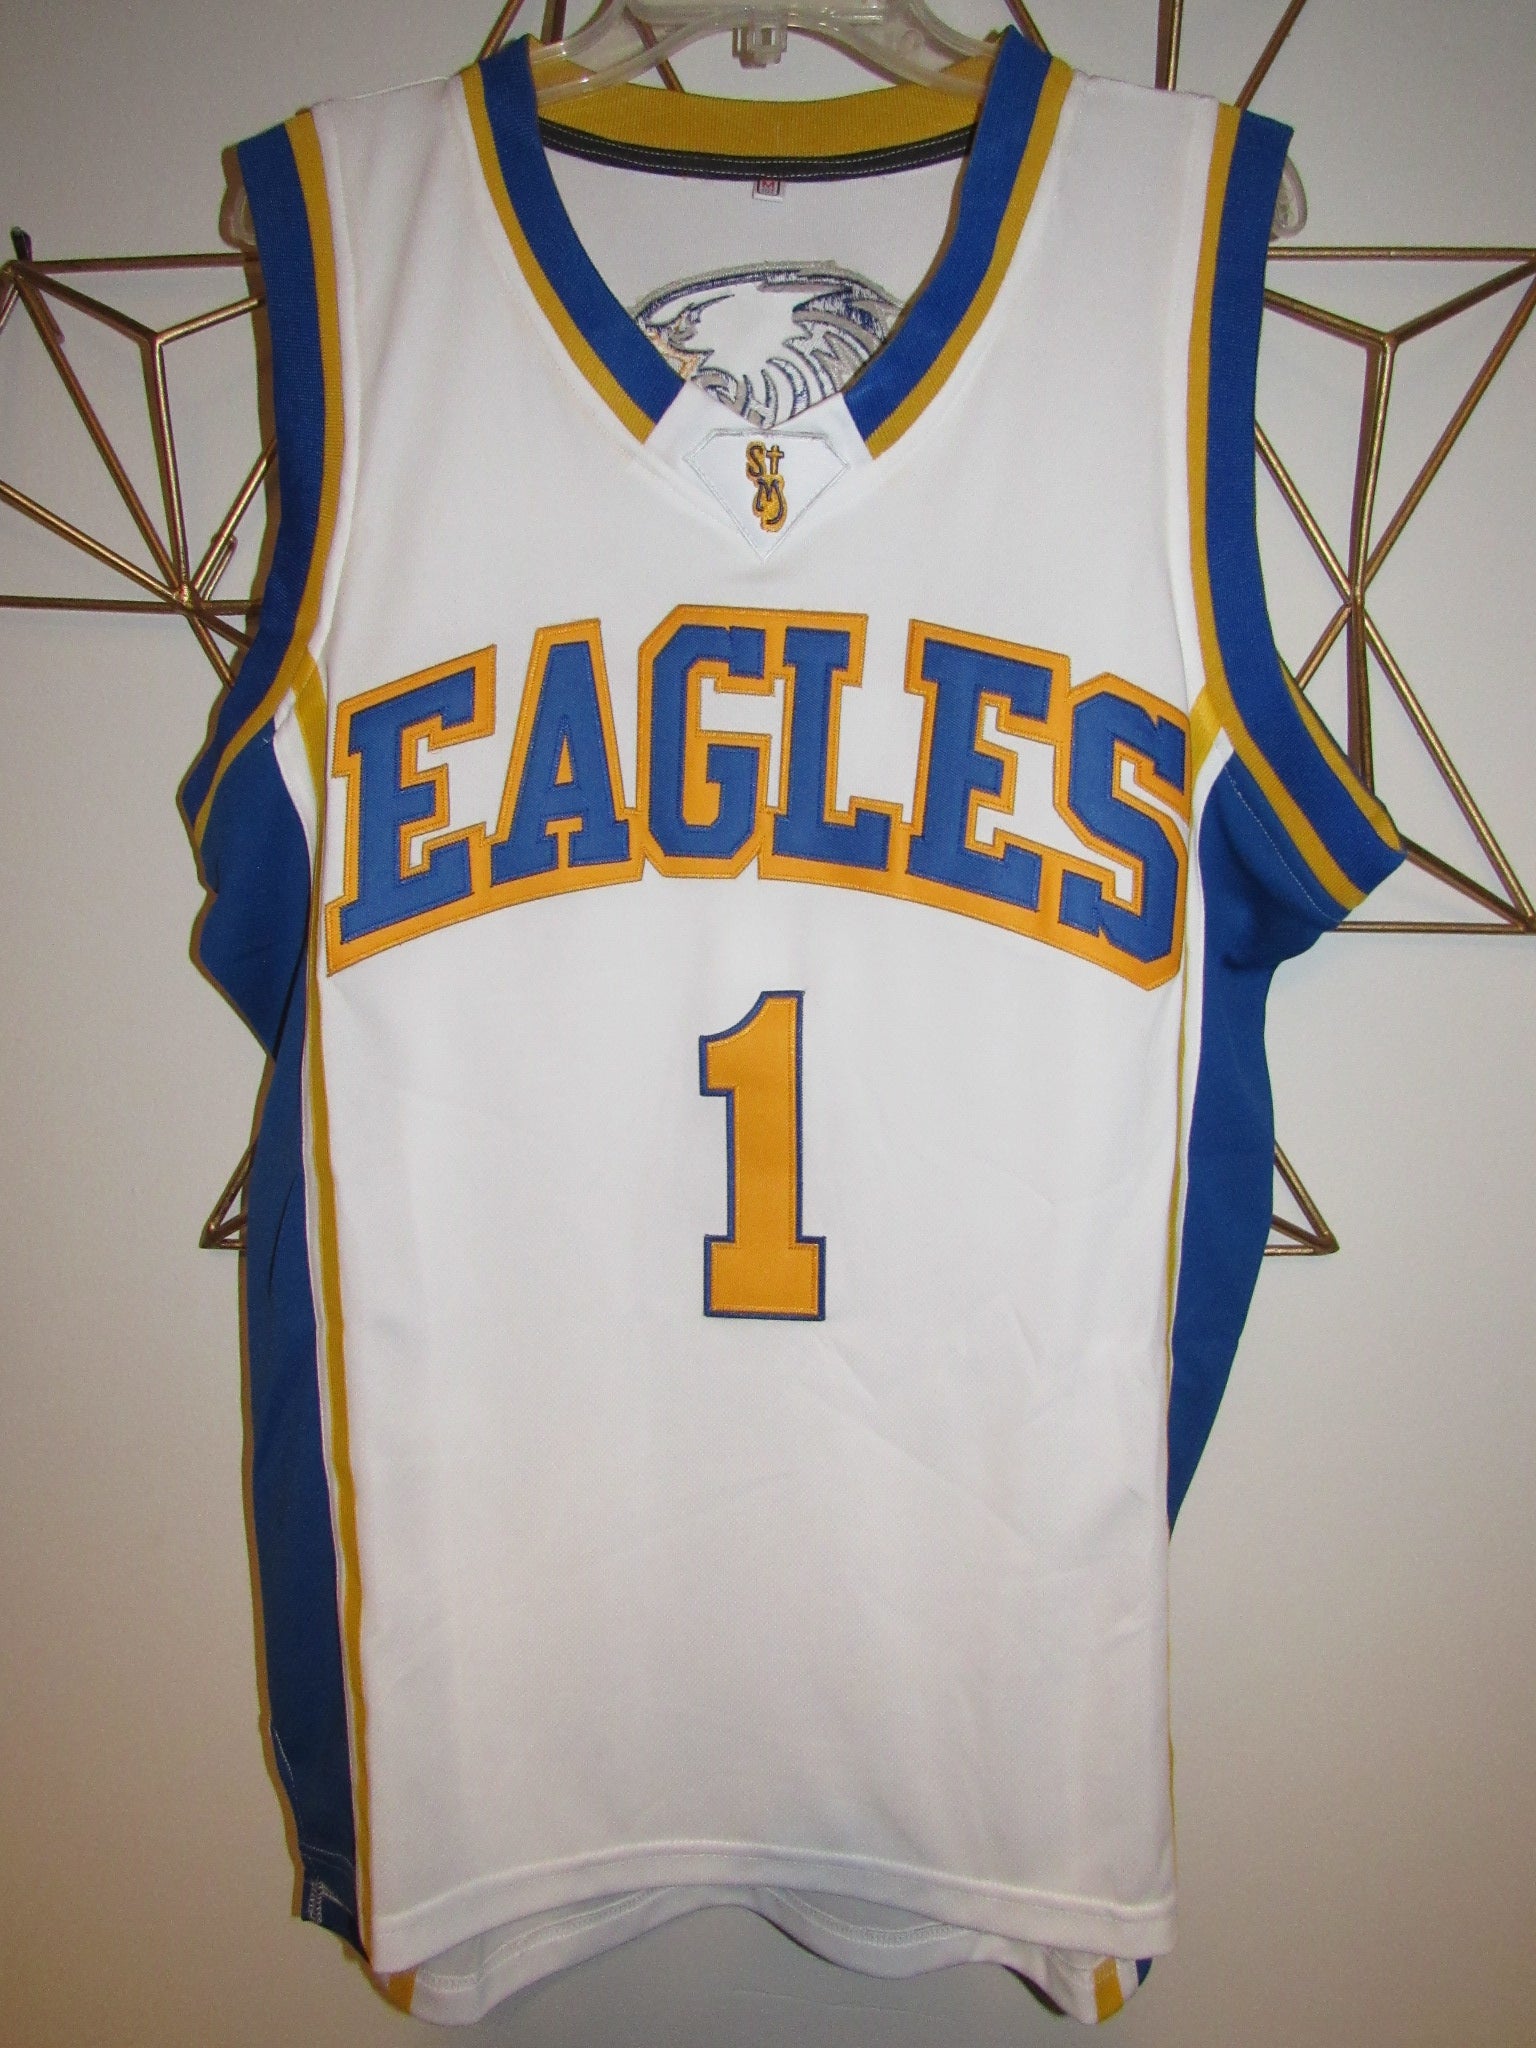 Old Vintage Style Klay Thompson Basketball Unisex T-Shirt